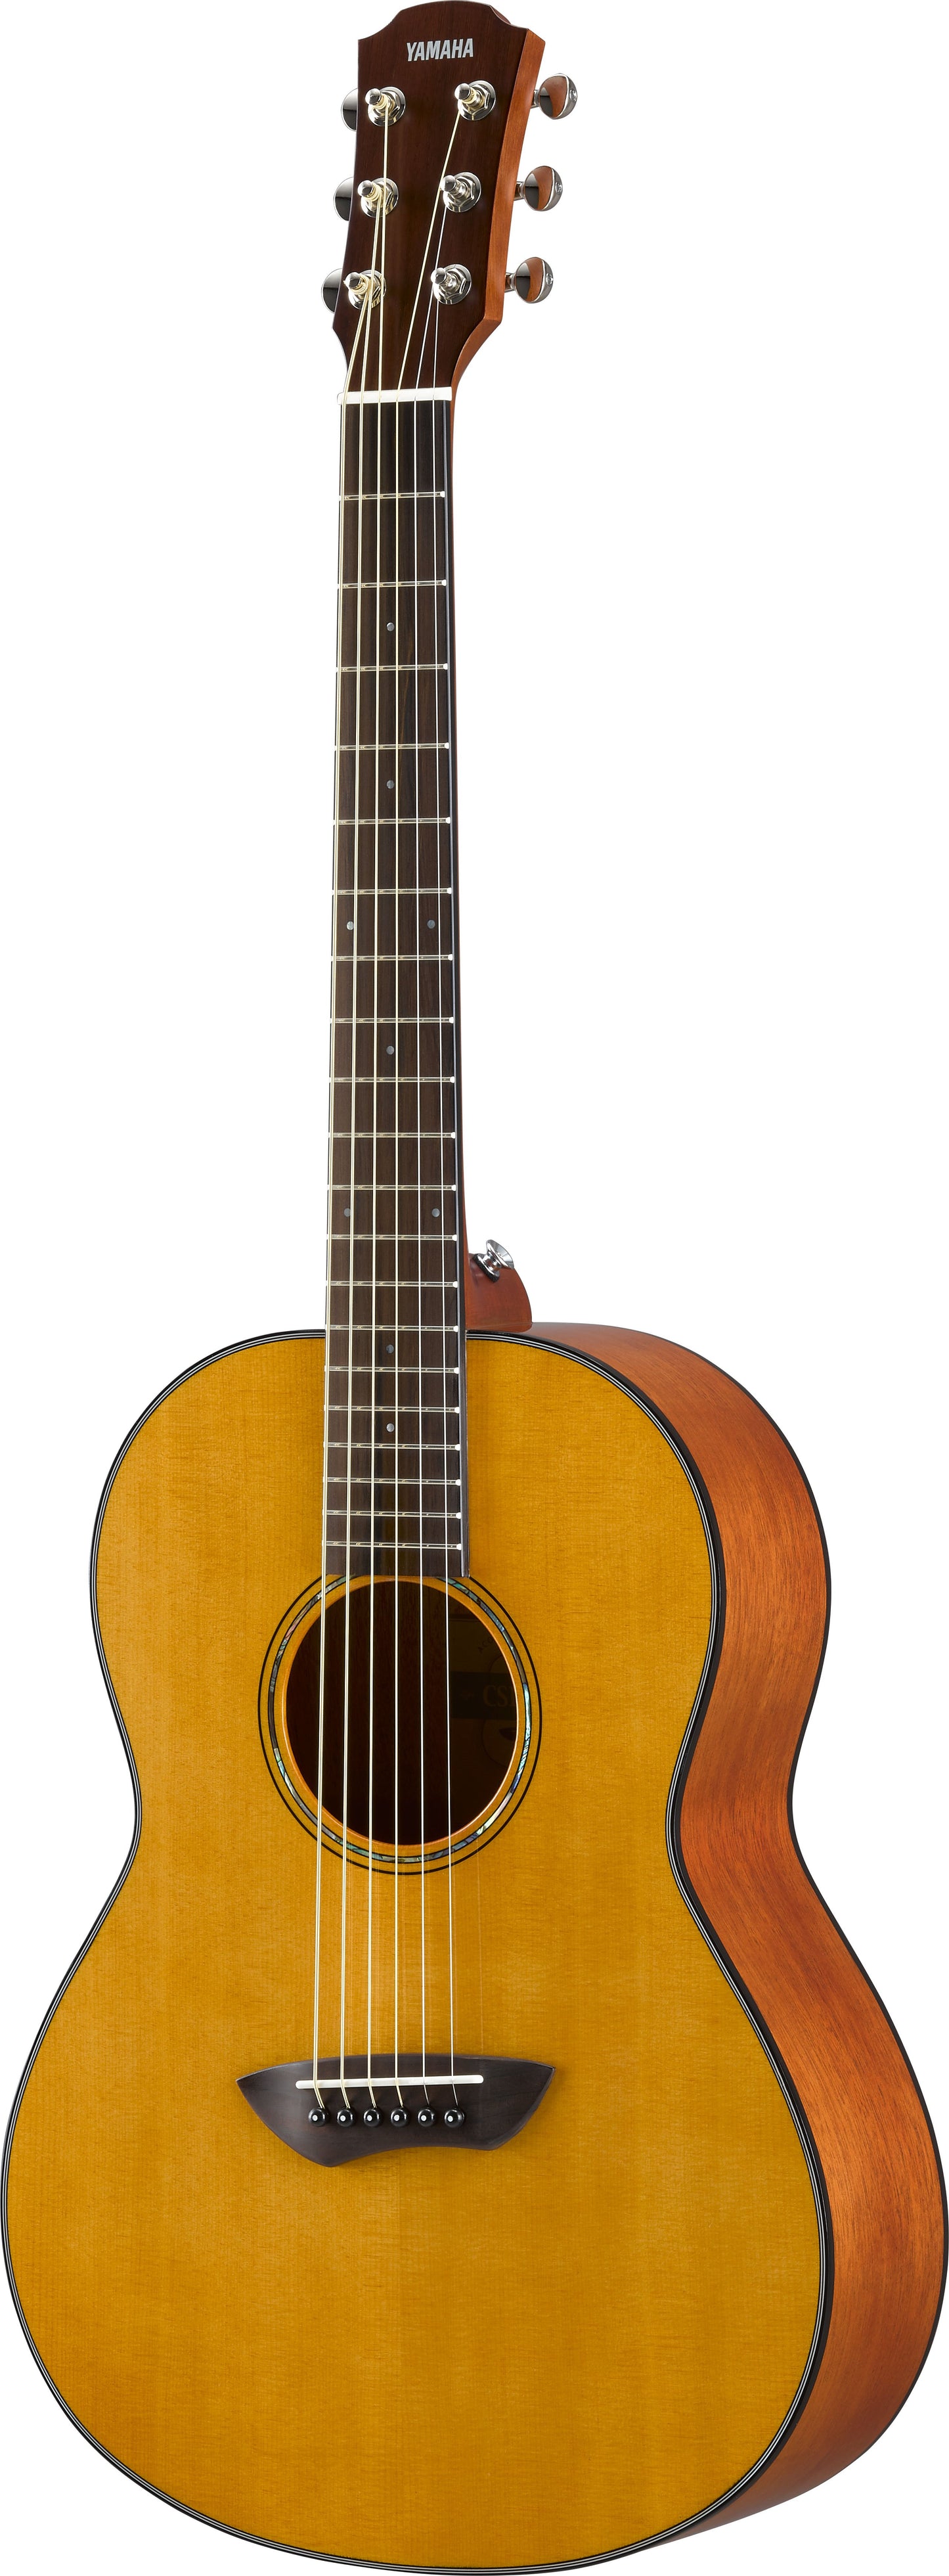 Yamaha CSF1M - Travel Acoustic Guitar - Vintage Natural